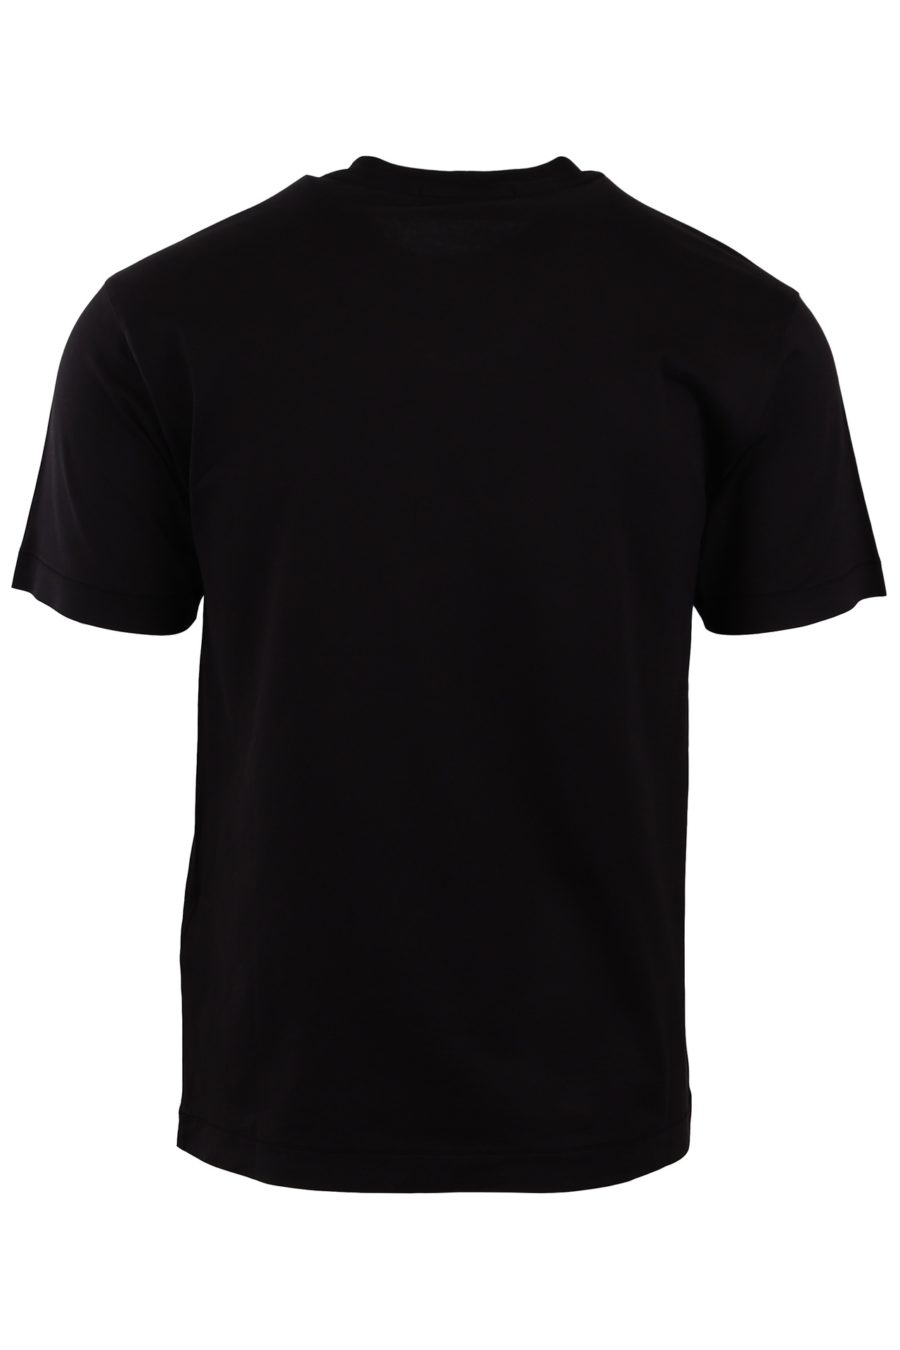 Stone Island schwarzes T-Shirt mit Logoaufnäher - acdc5929418009adbdda4a7ecba1b7730397024d 1